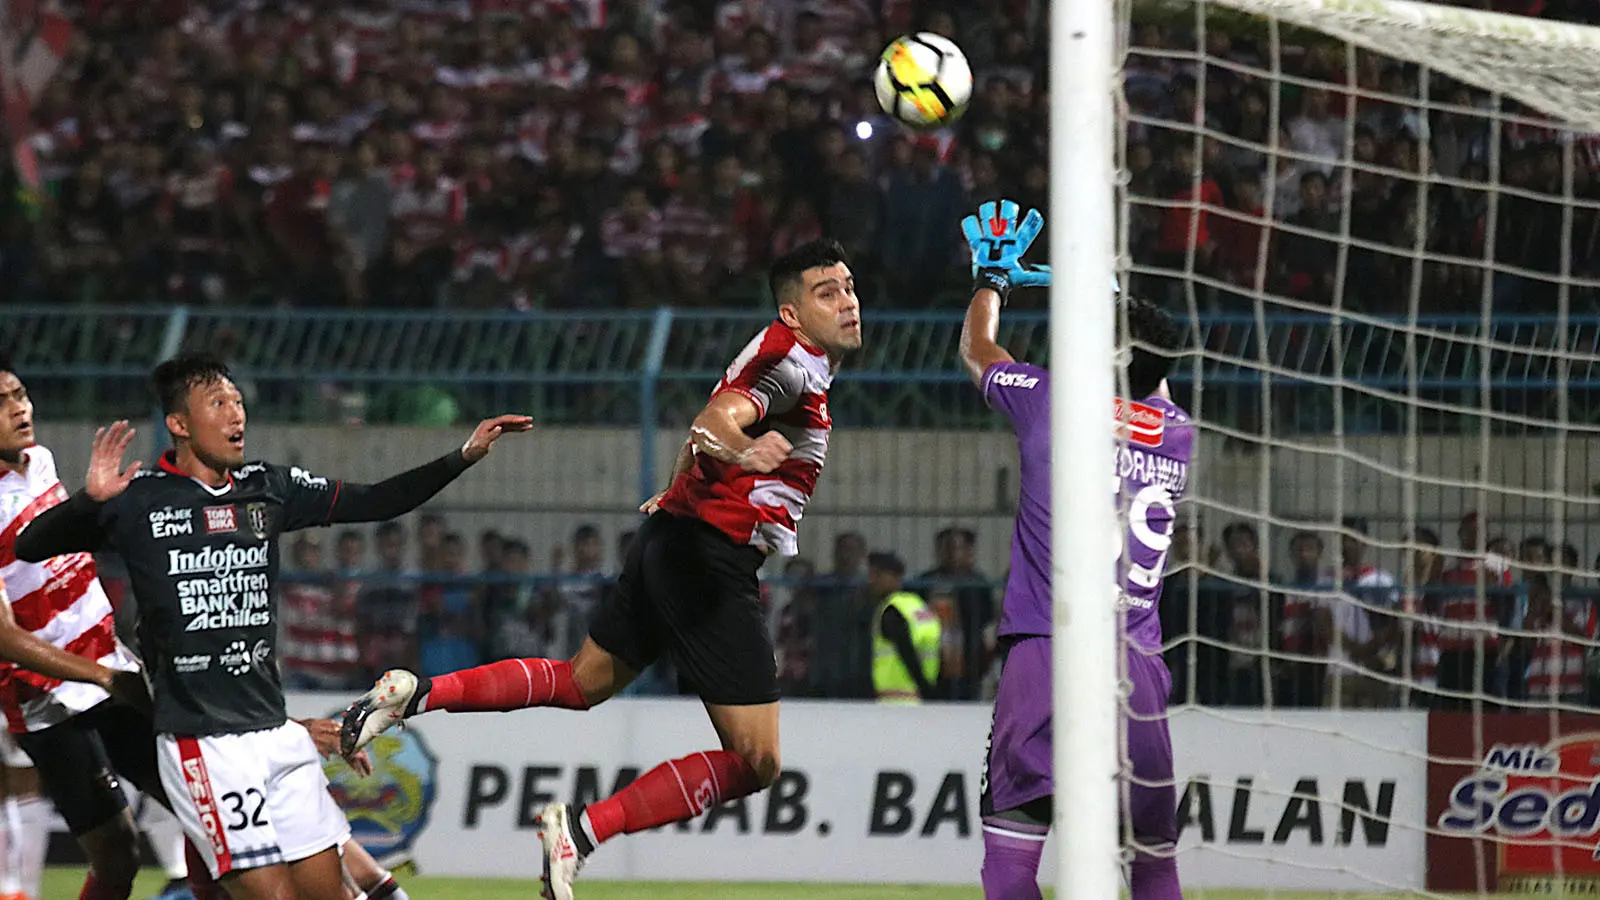 Duel Madura United vs Bali United di Stadion Bangkalan, Bangkalan, Minggu (3/6/2018). (Bola.com/Aditya Wany)